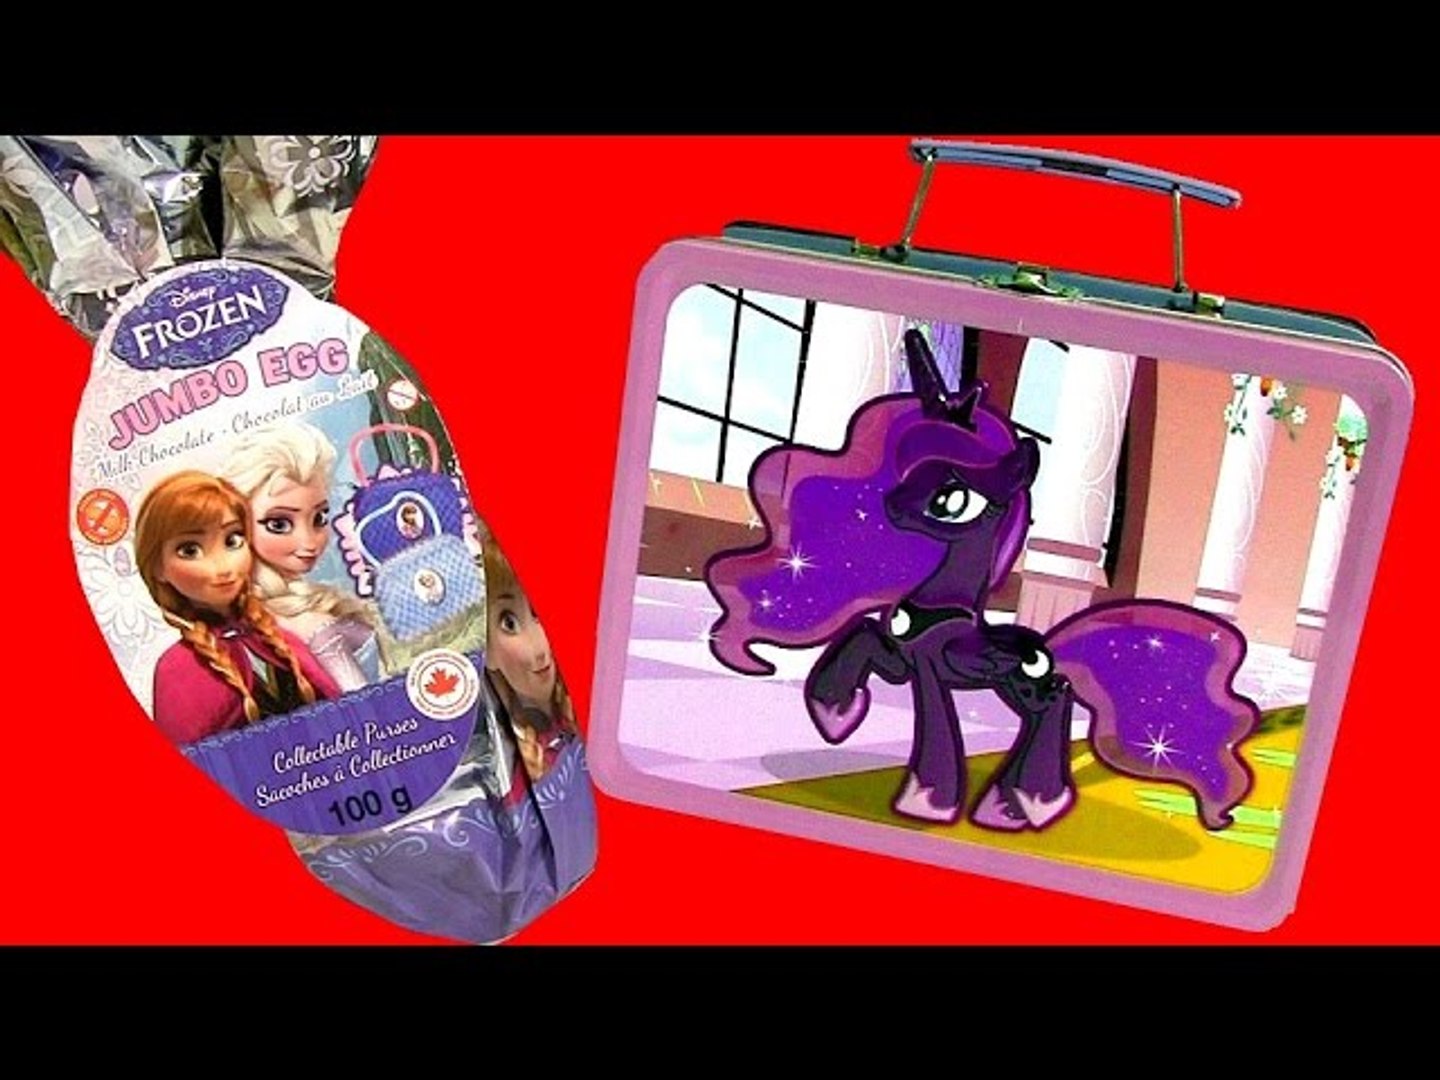 MyLittlePony Lunch Box Surprise Giant Disney Frozen Jumbo Choco Egg  Princess Anna Elsa Play-Doh - video Dailymotion